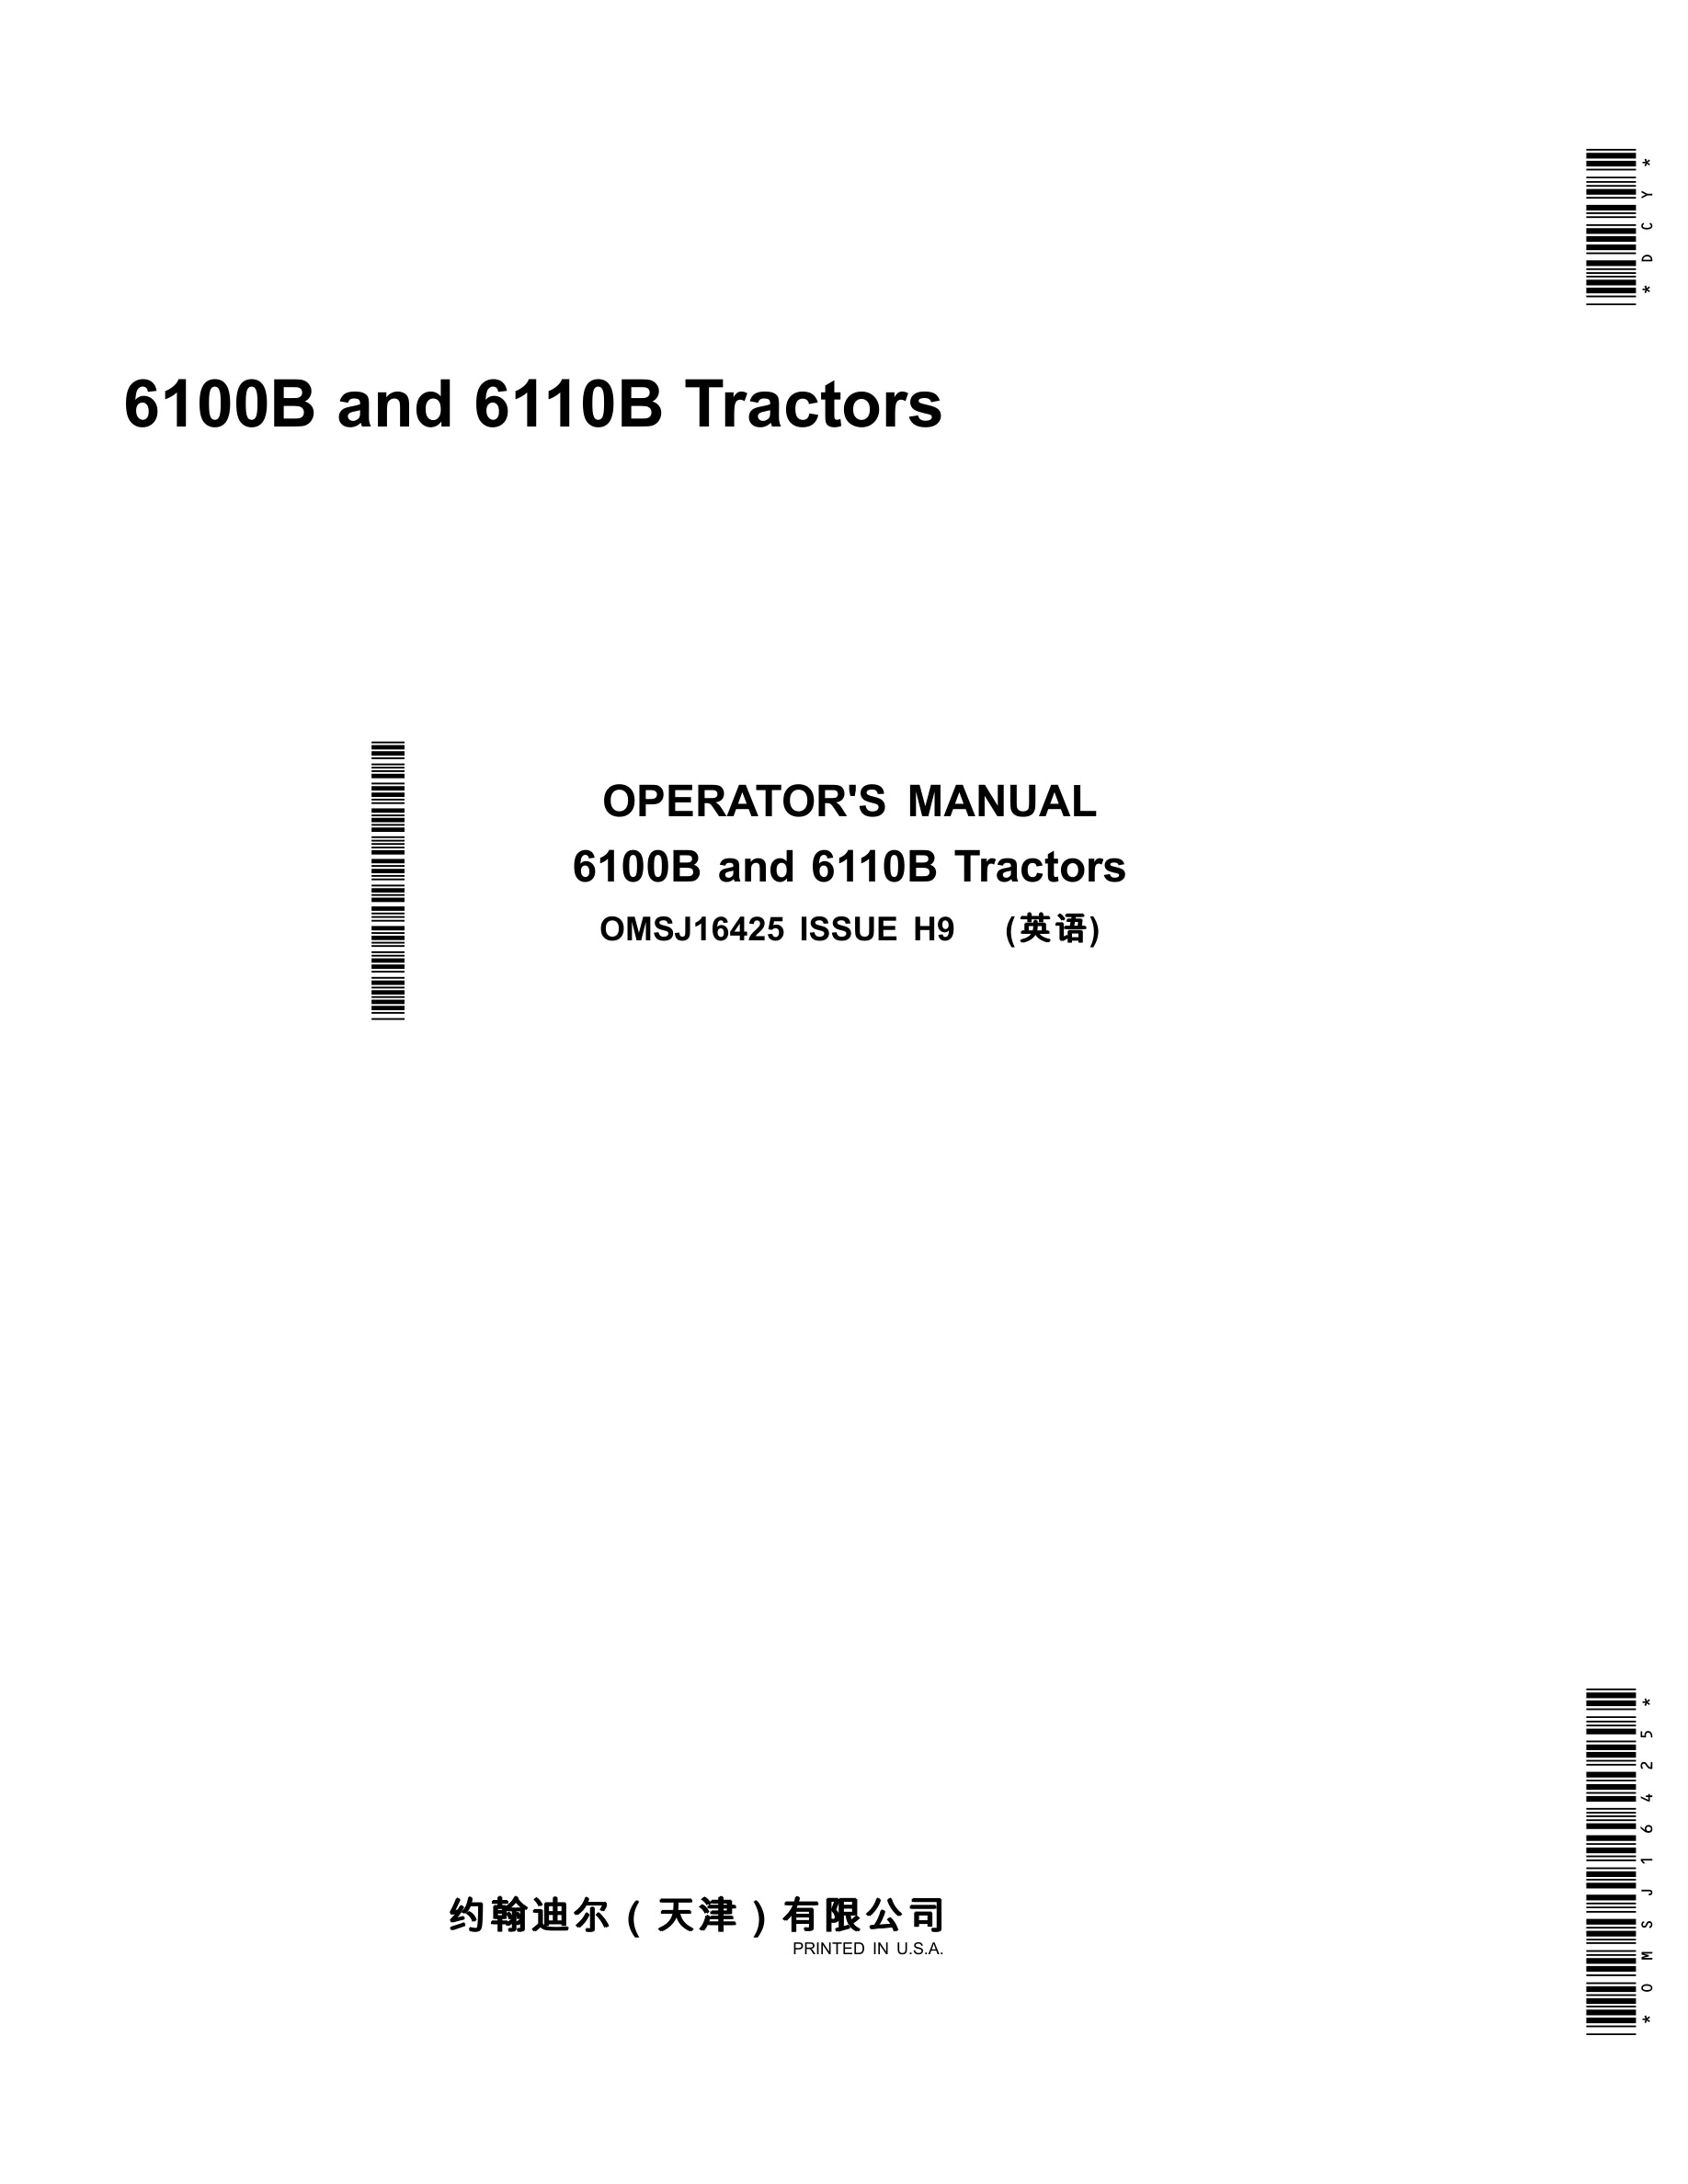 John Deere 6100b And 6110b Tractors Operator Manuals OMSJ16425-1